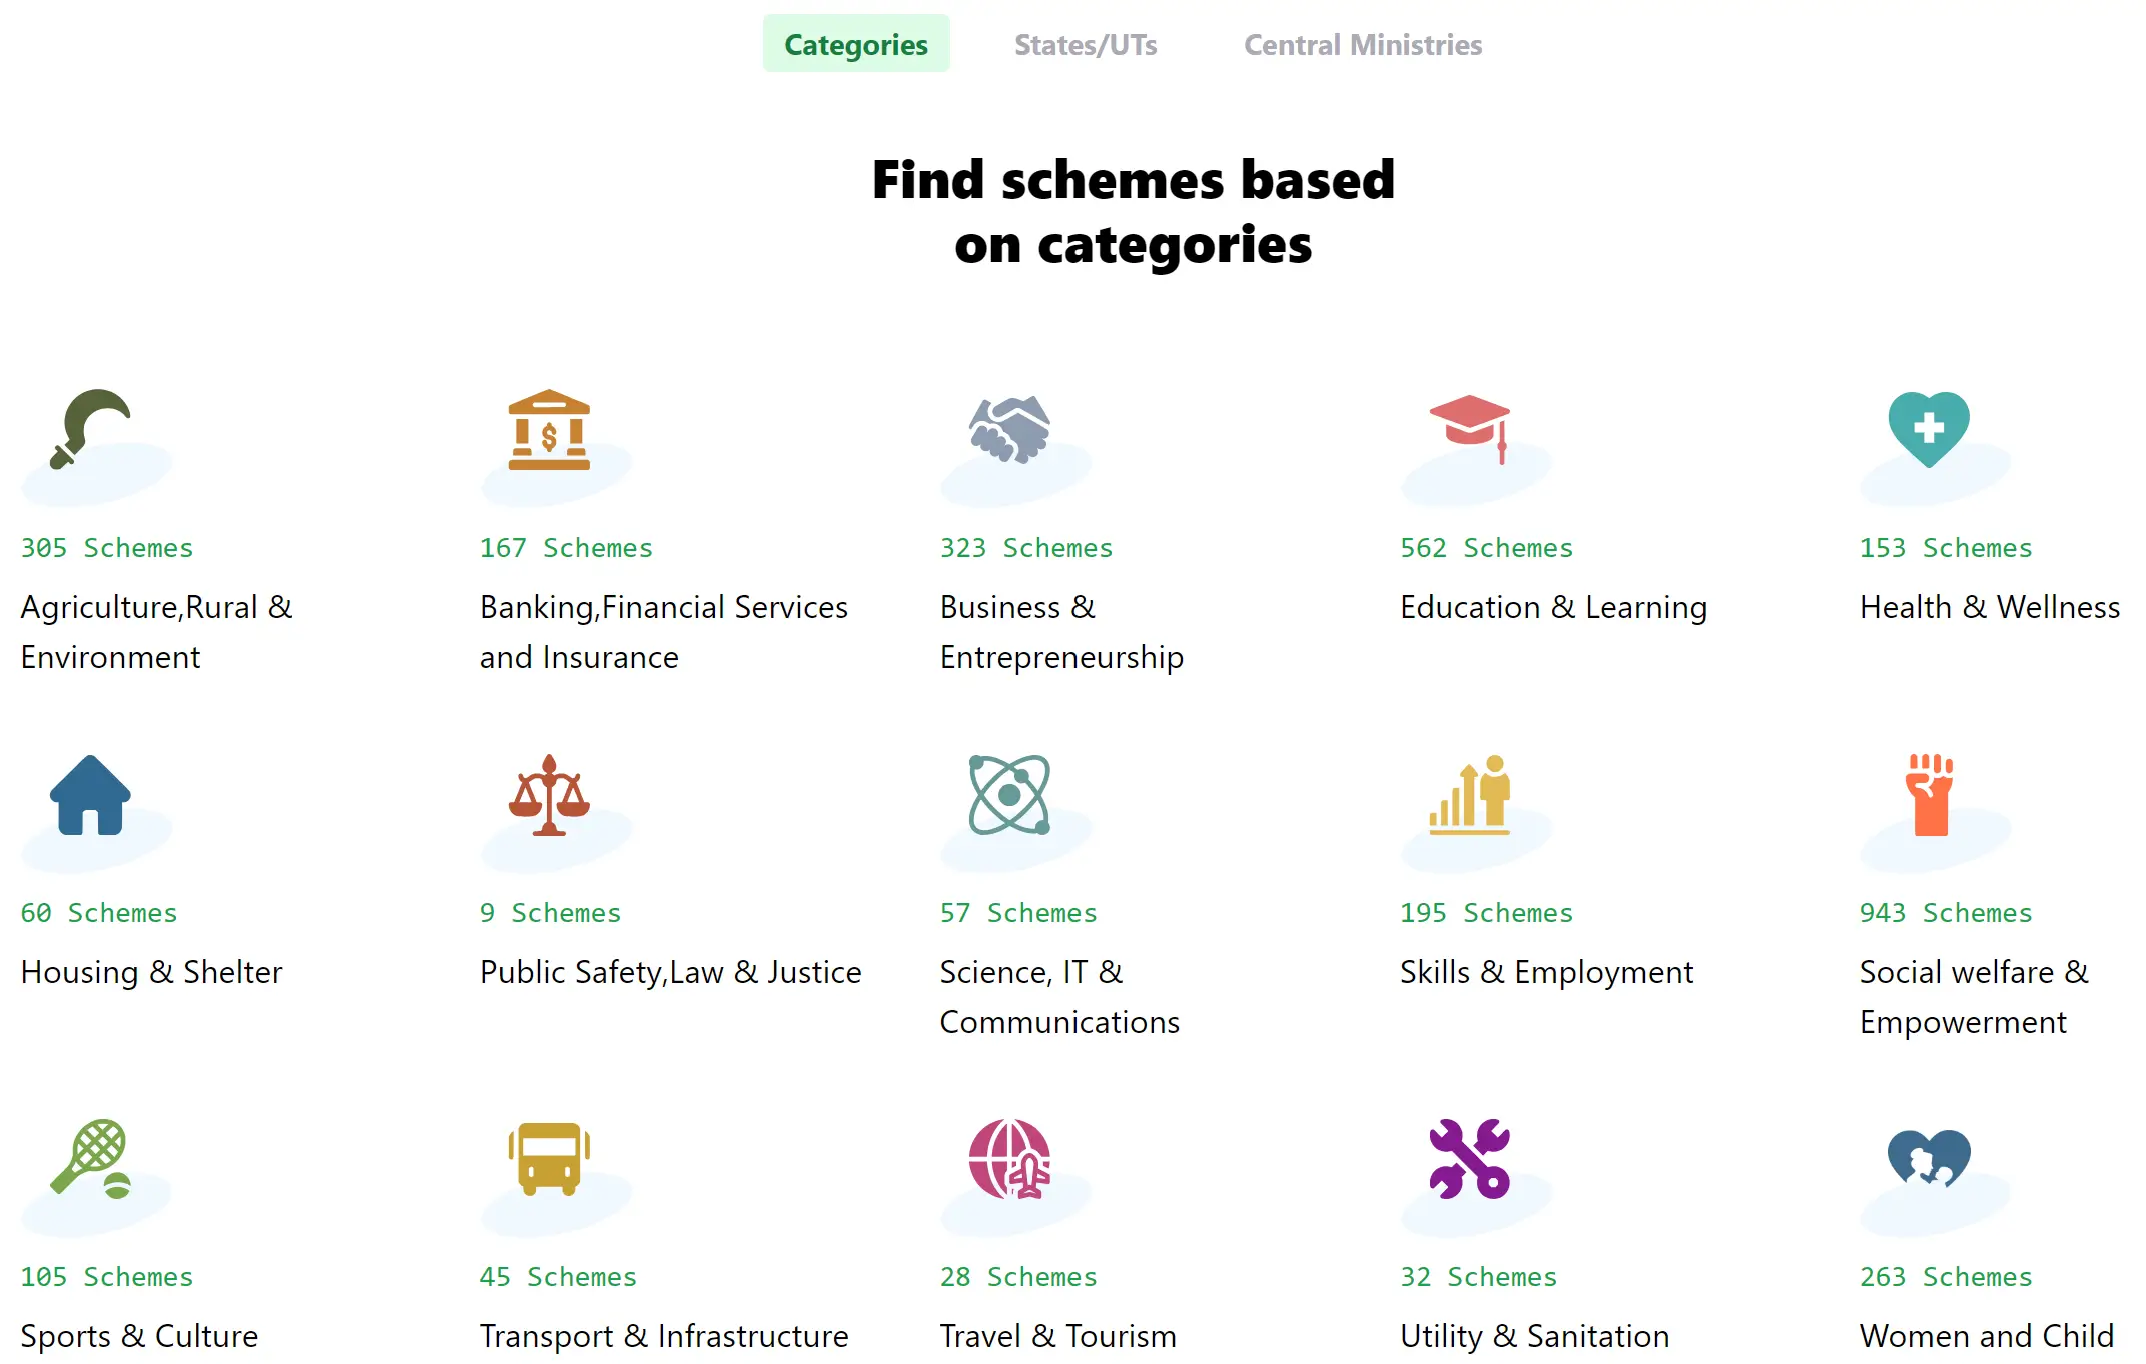 Schemes by Category